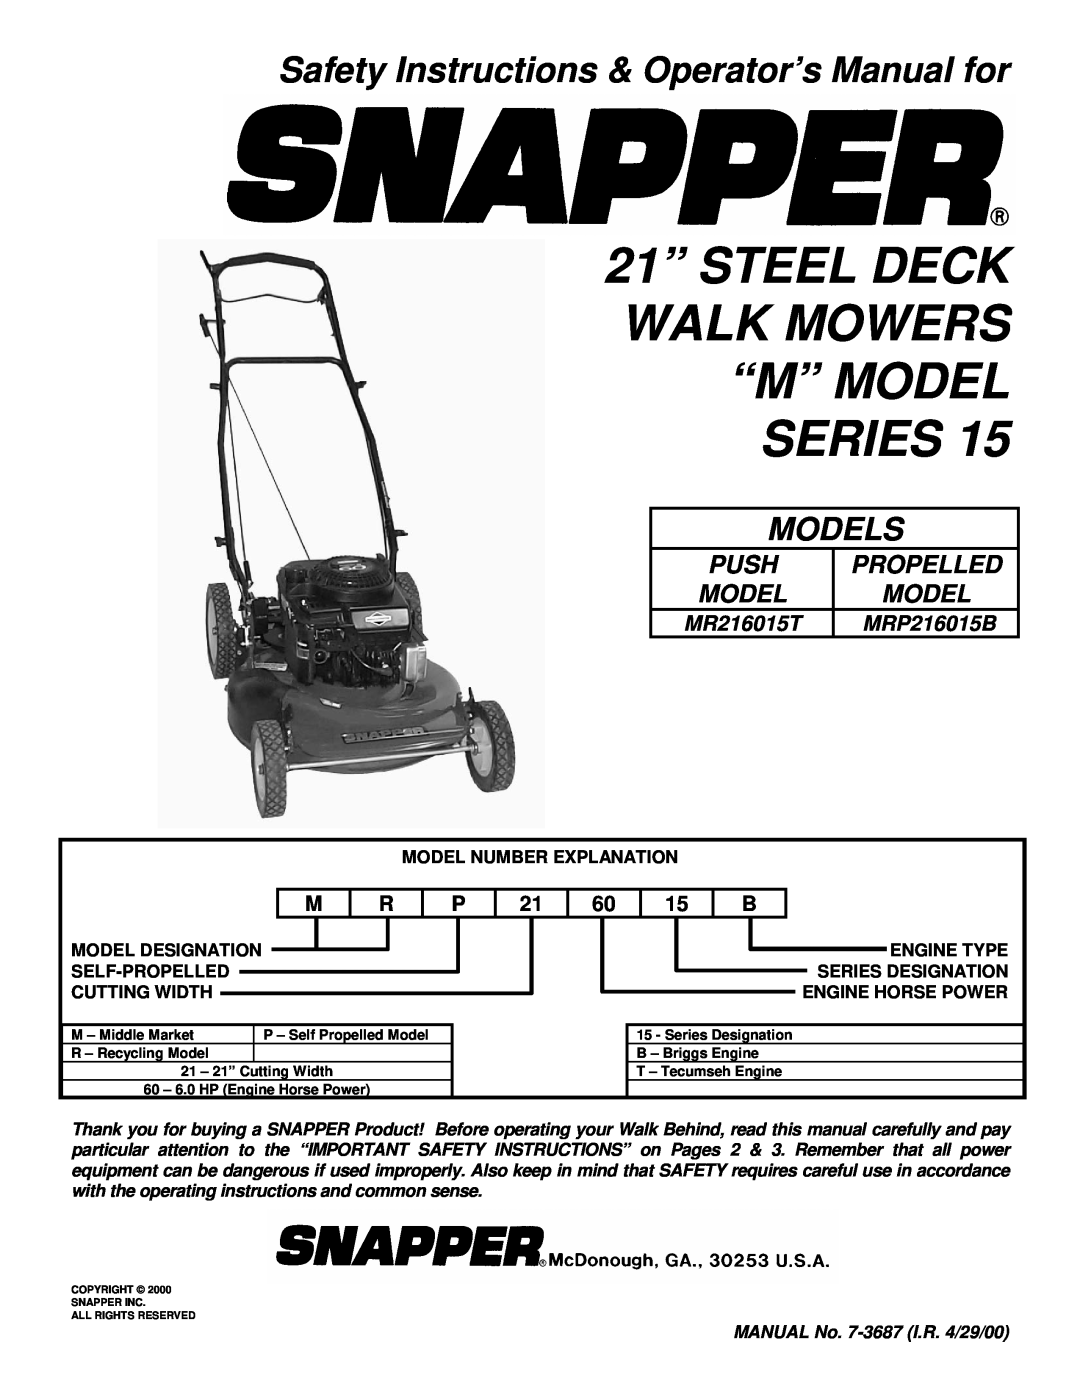 Snapper MRP216015B important safety instructions 21” STEEL DECK WALK MOWERS “M” MODEL SERIES, Models, Push, Propelled 